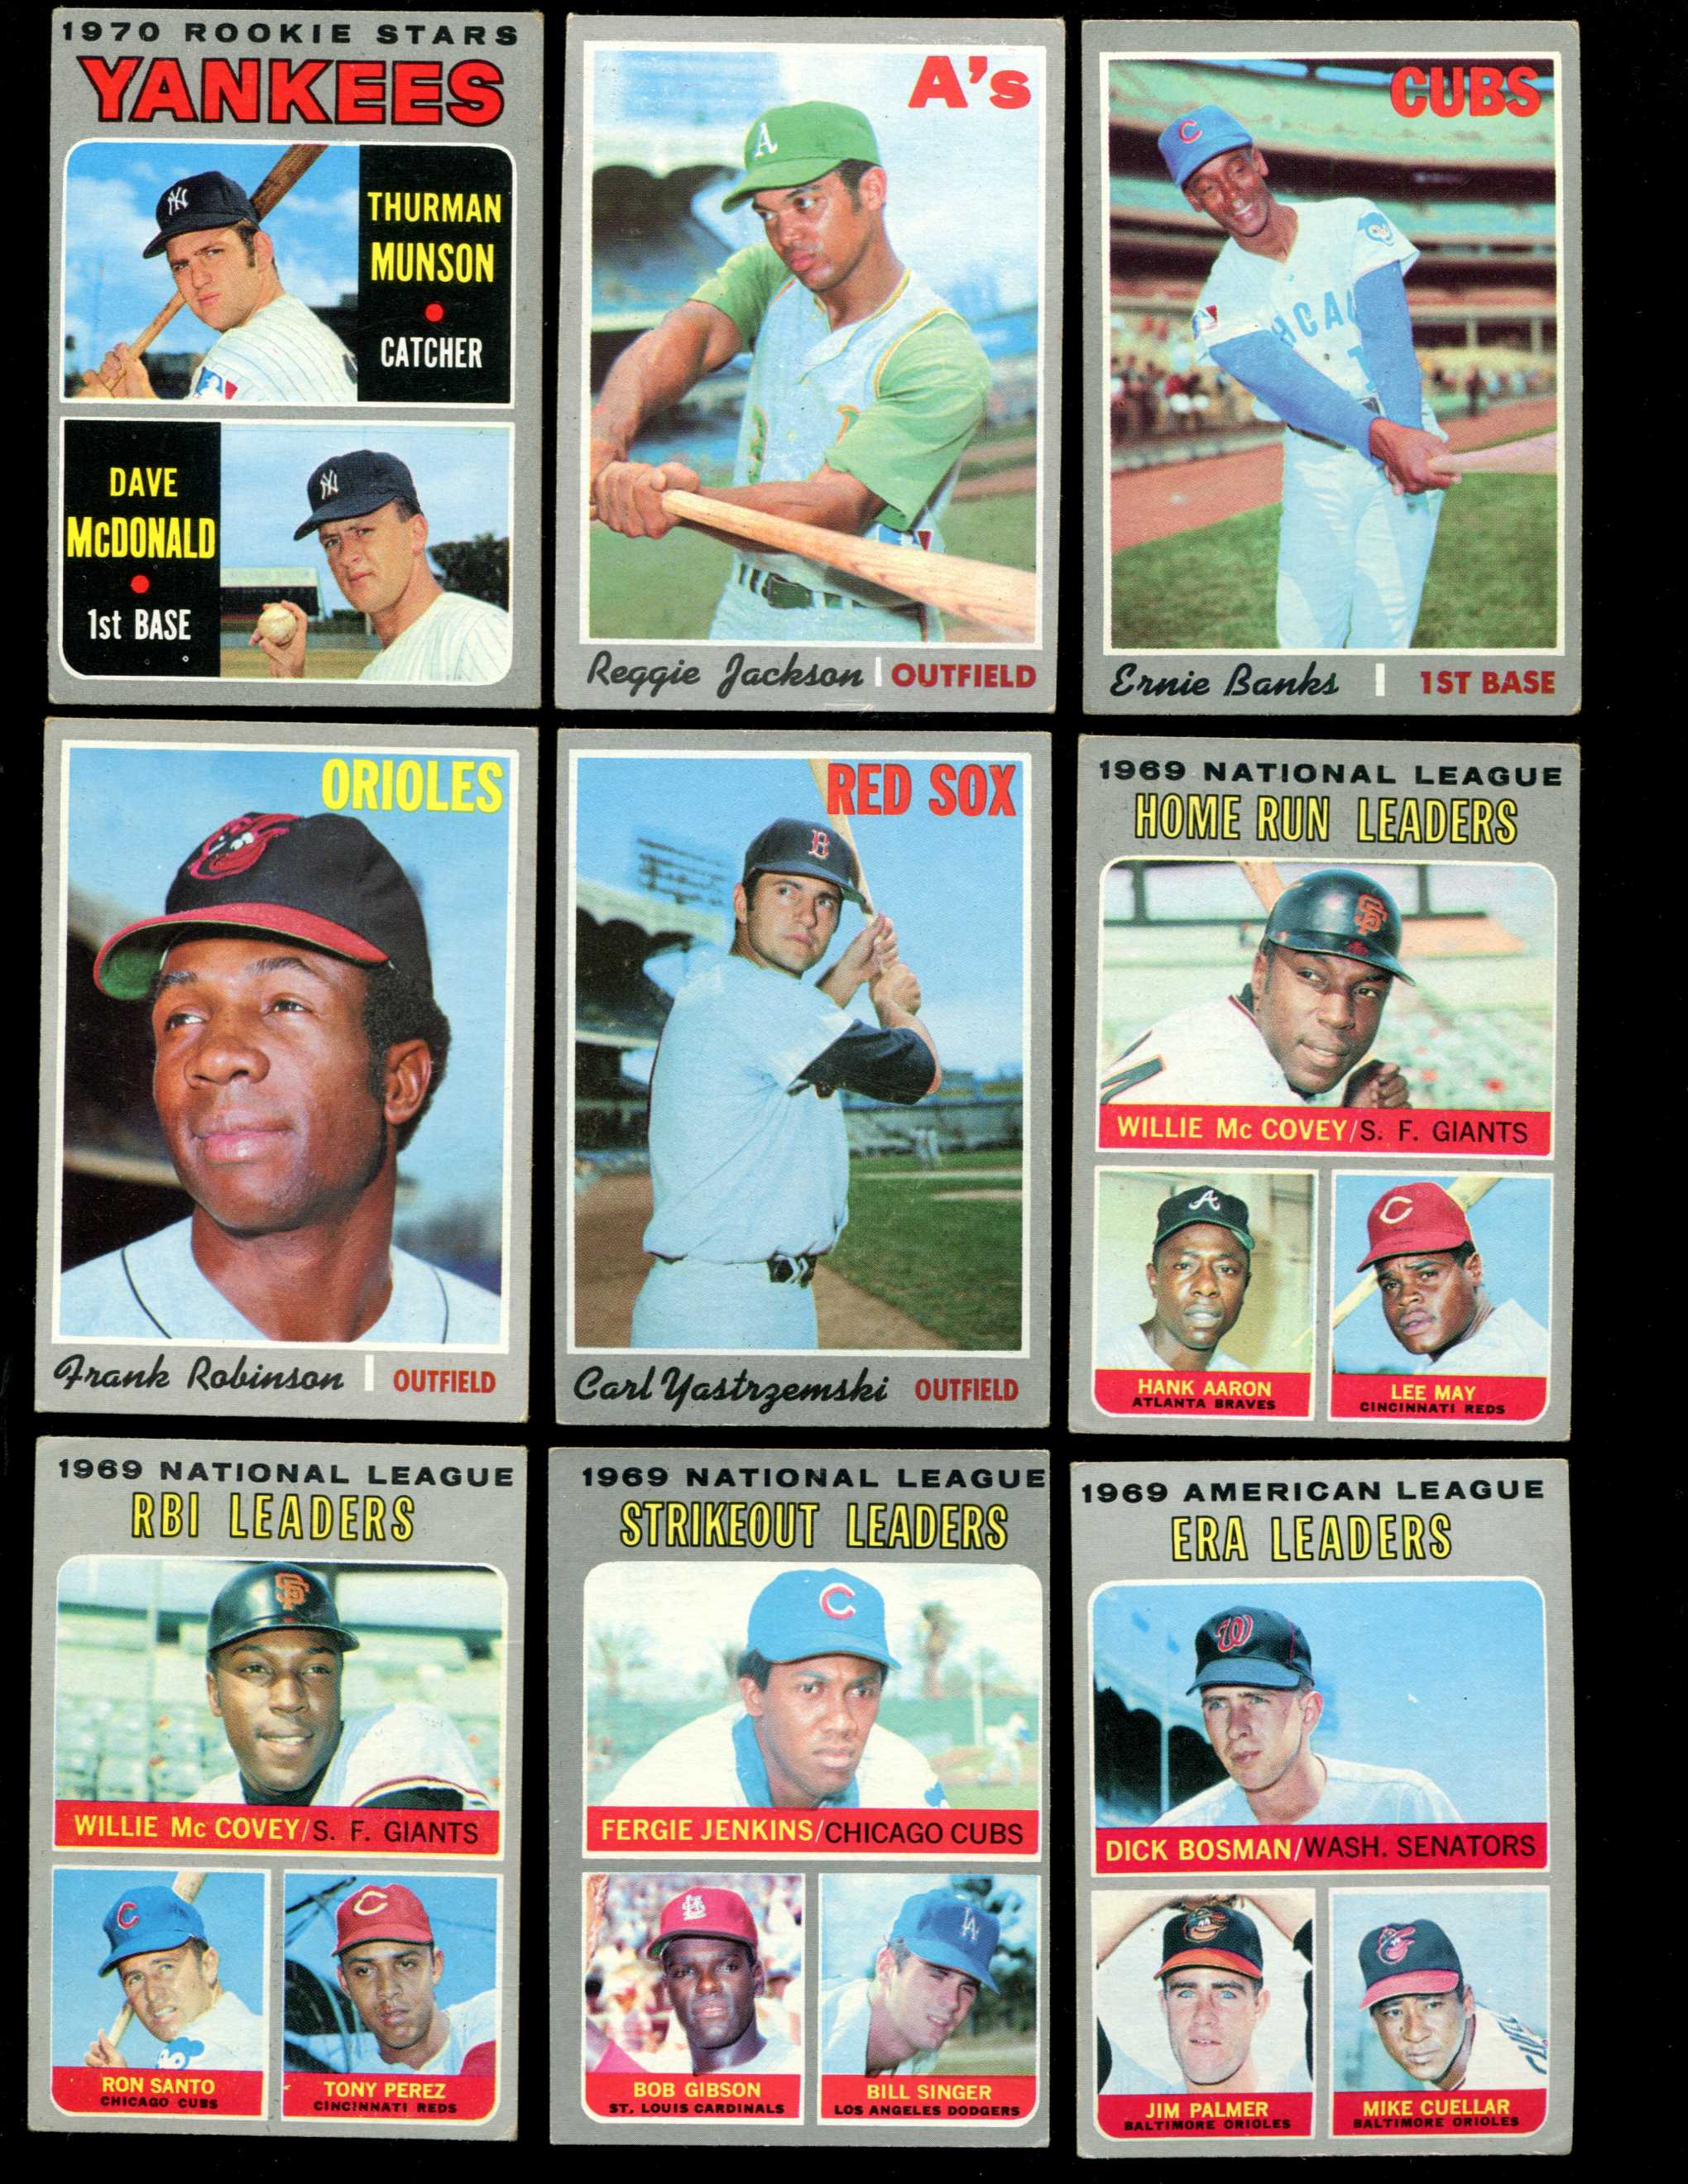 1970 Topps #189 THURMAN MUNSON ROOKIE [#x] (Yankees) Baseball cards value